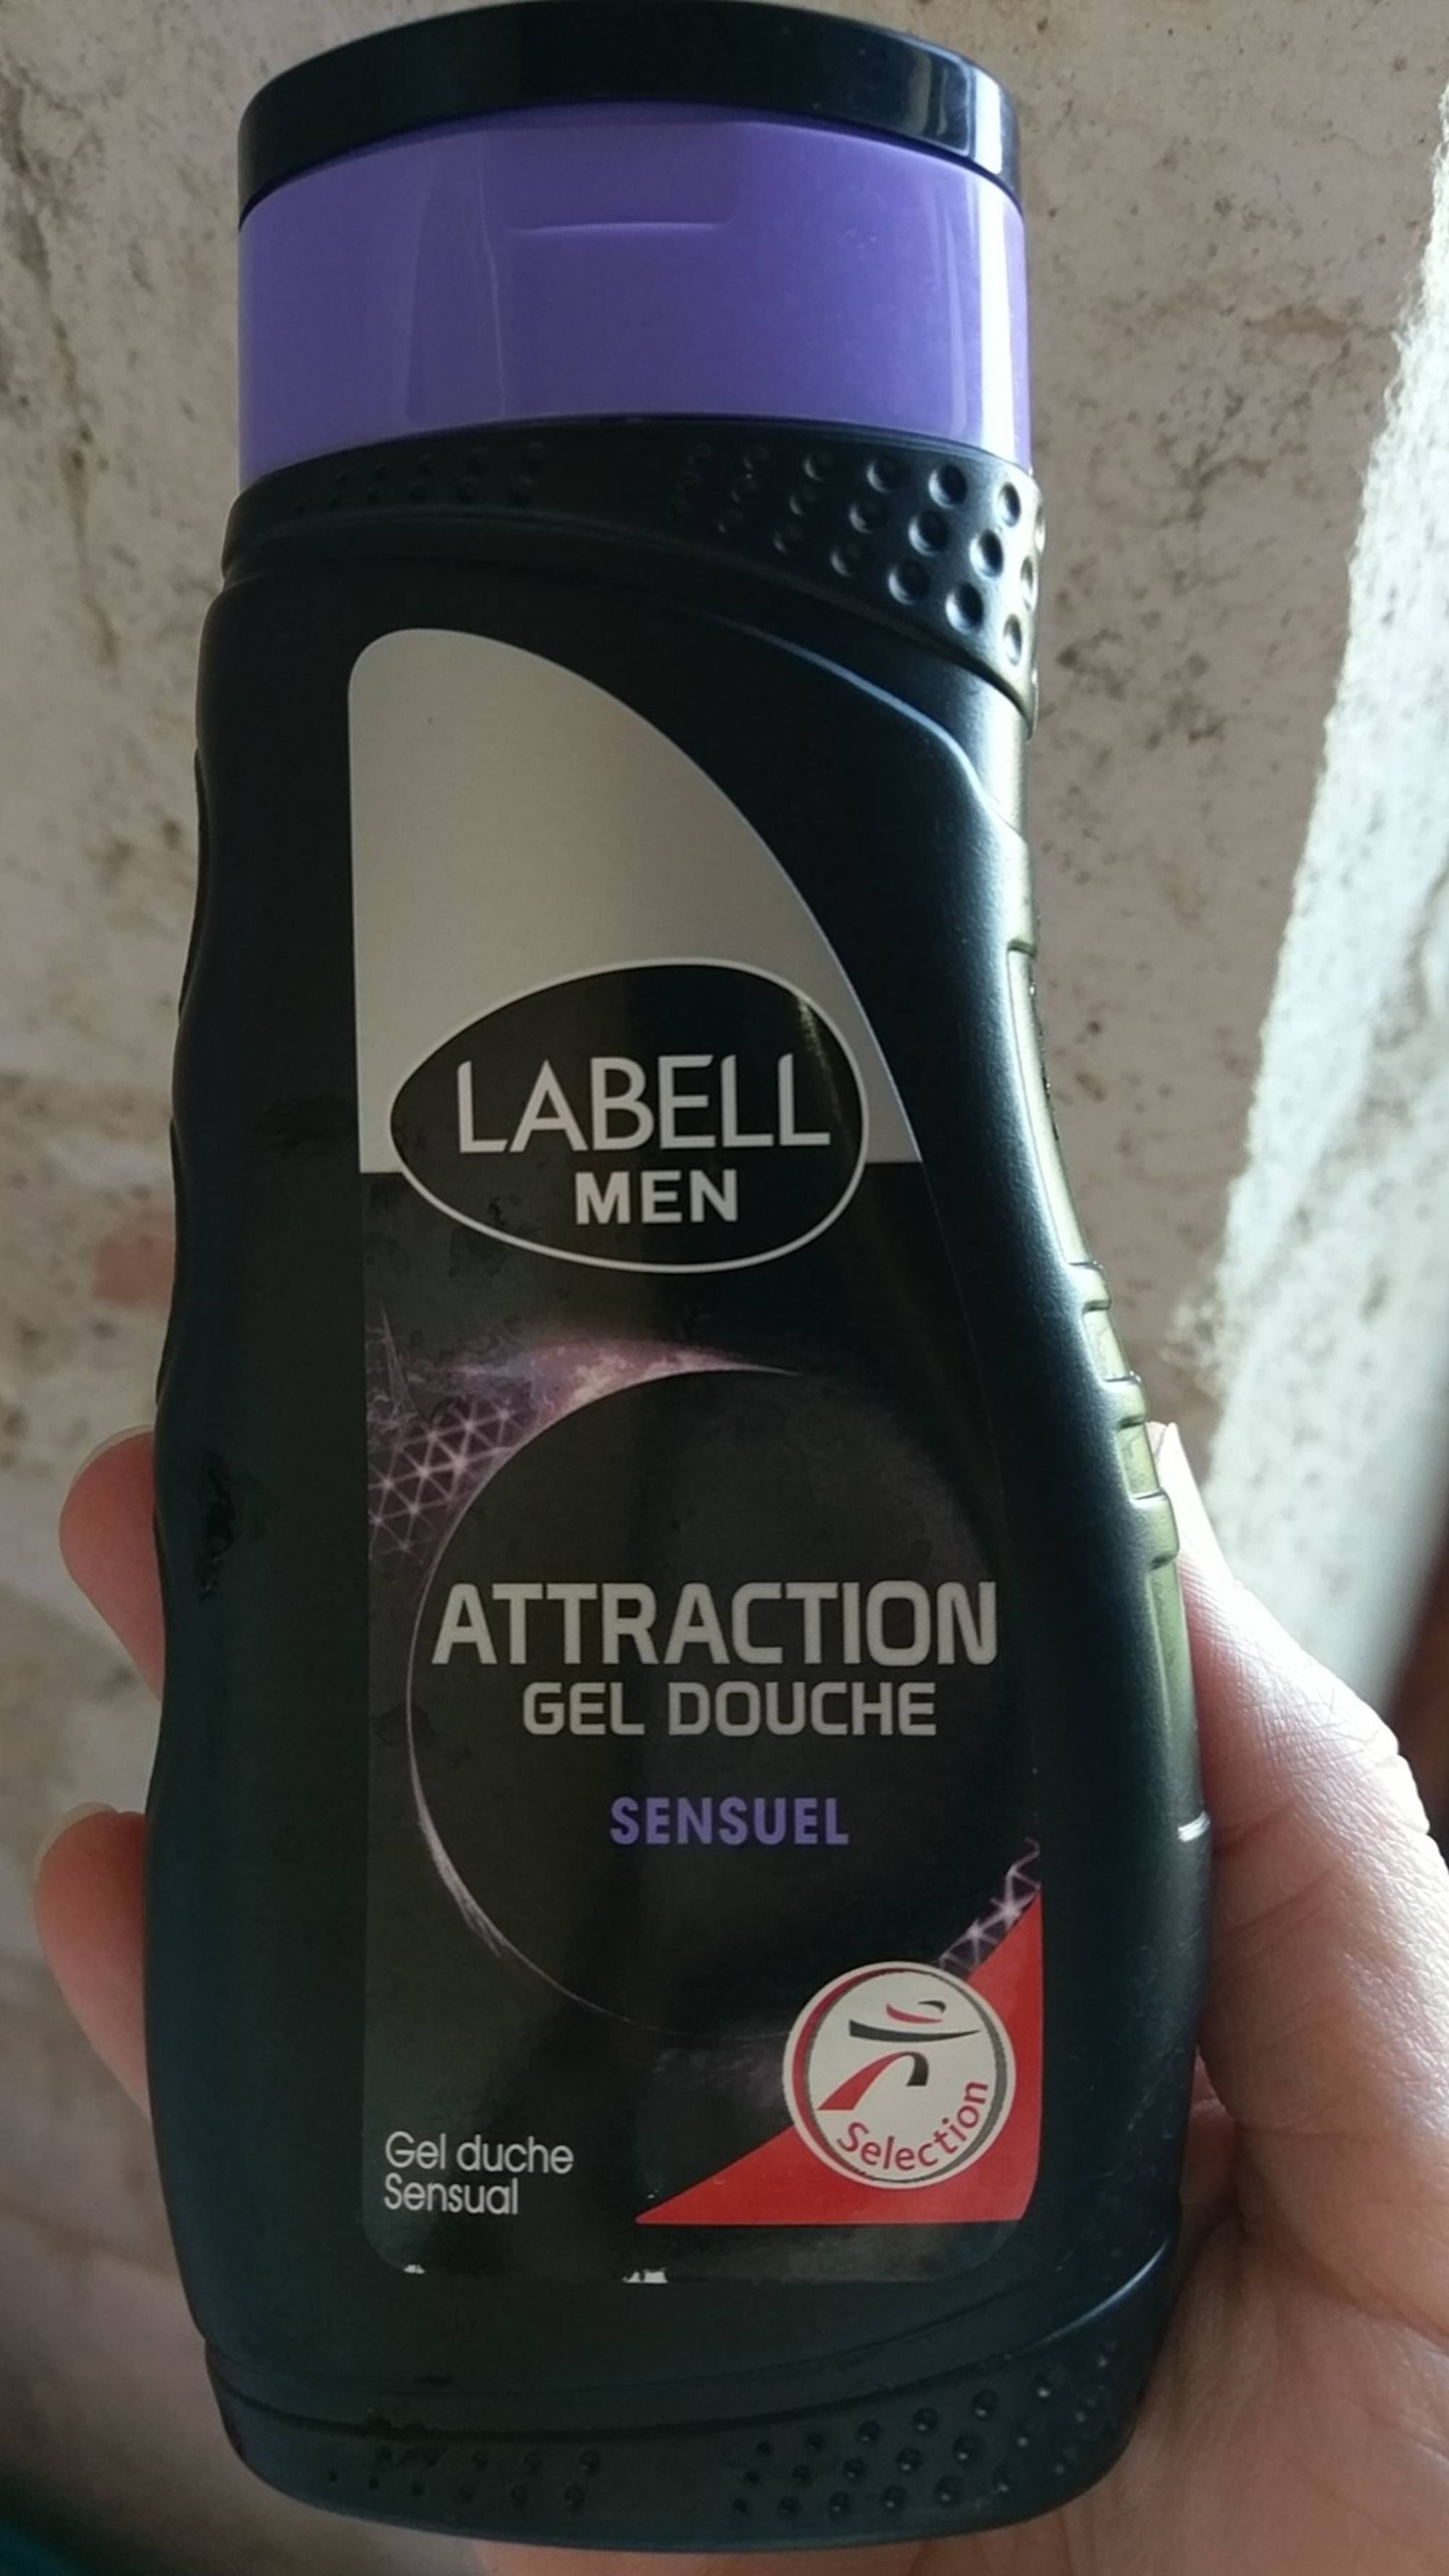 LABELL - Men attraction gel douche sensuel